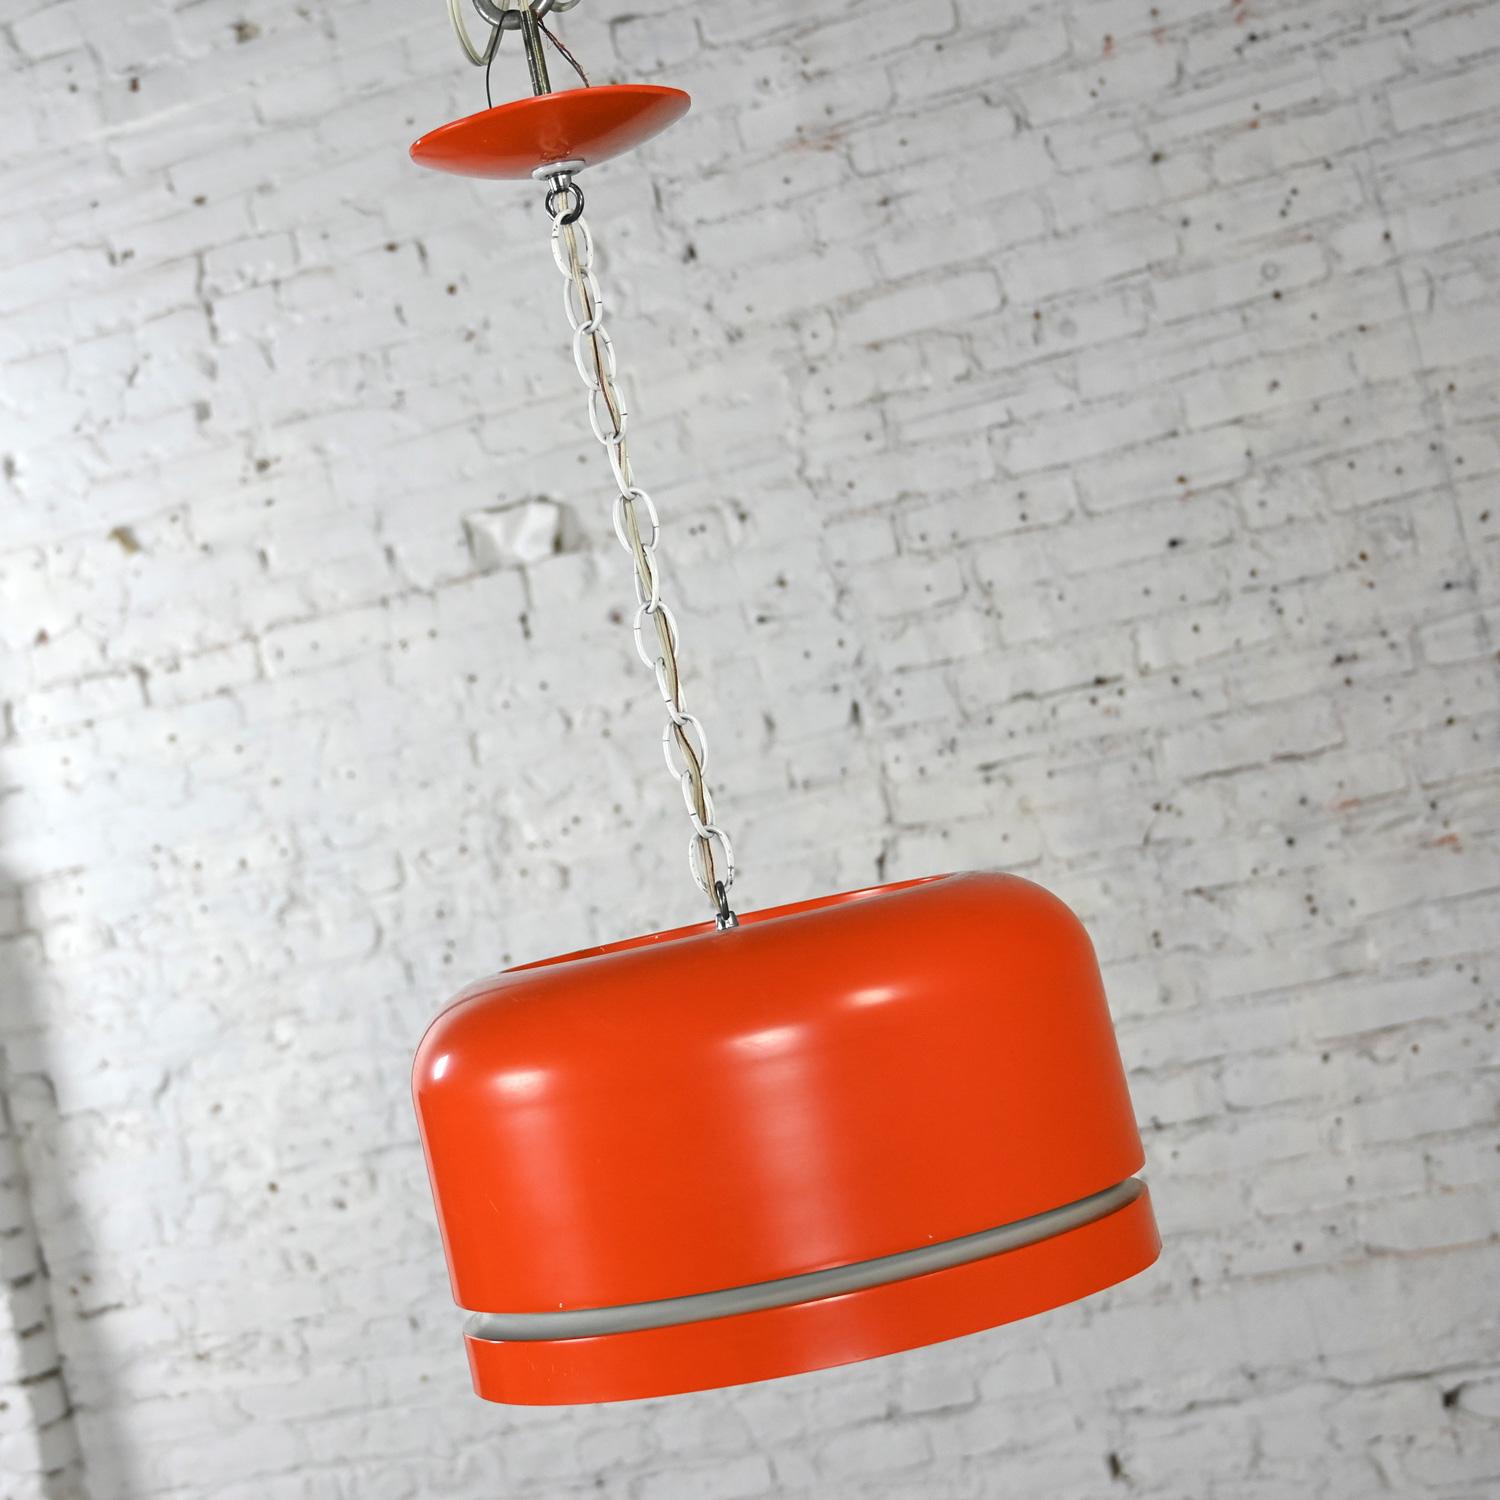 Mid Century Modern Orange Dome Pendant Hanging Light Fixture by Lightolier For Sale 7